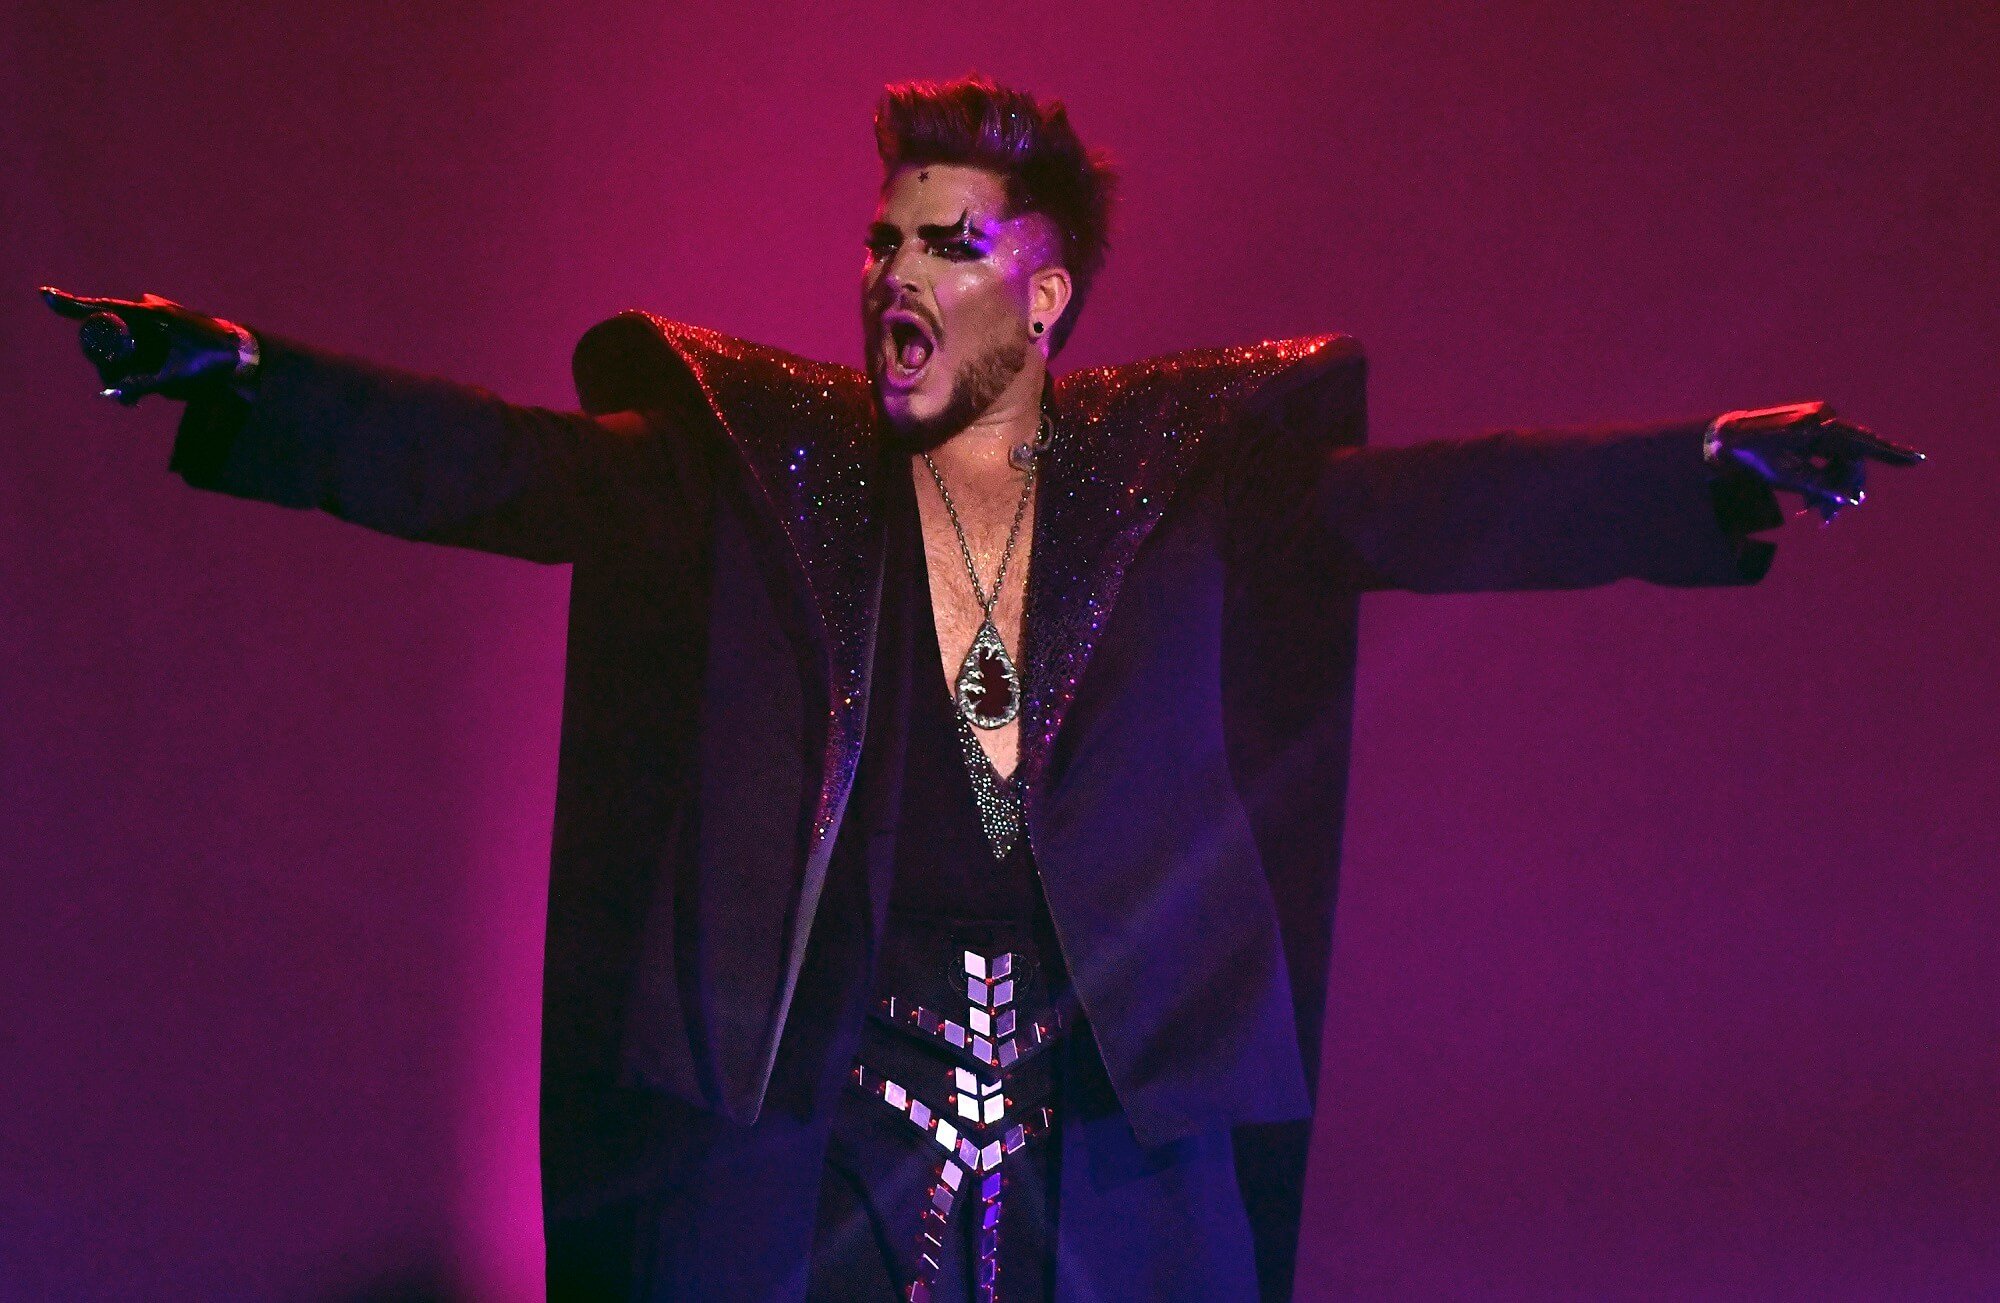 Adam Lambert performs on stage wearing a long black coat